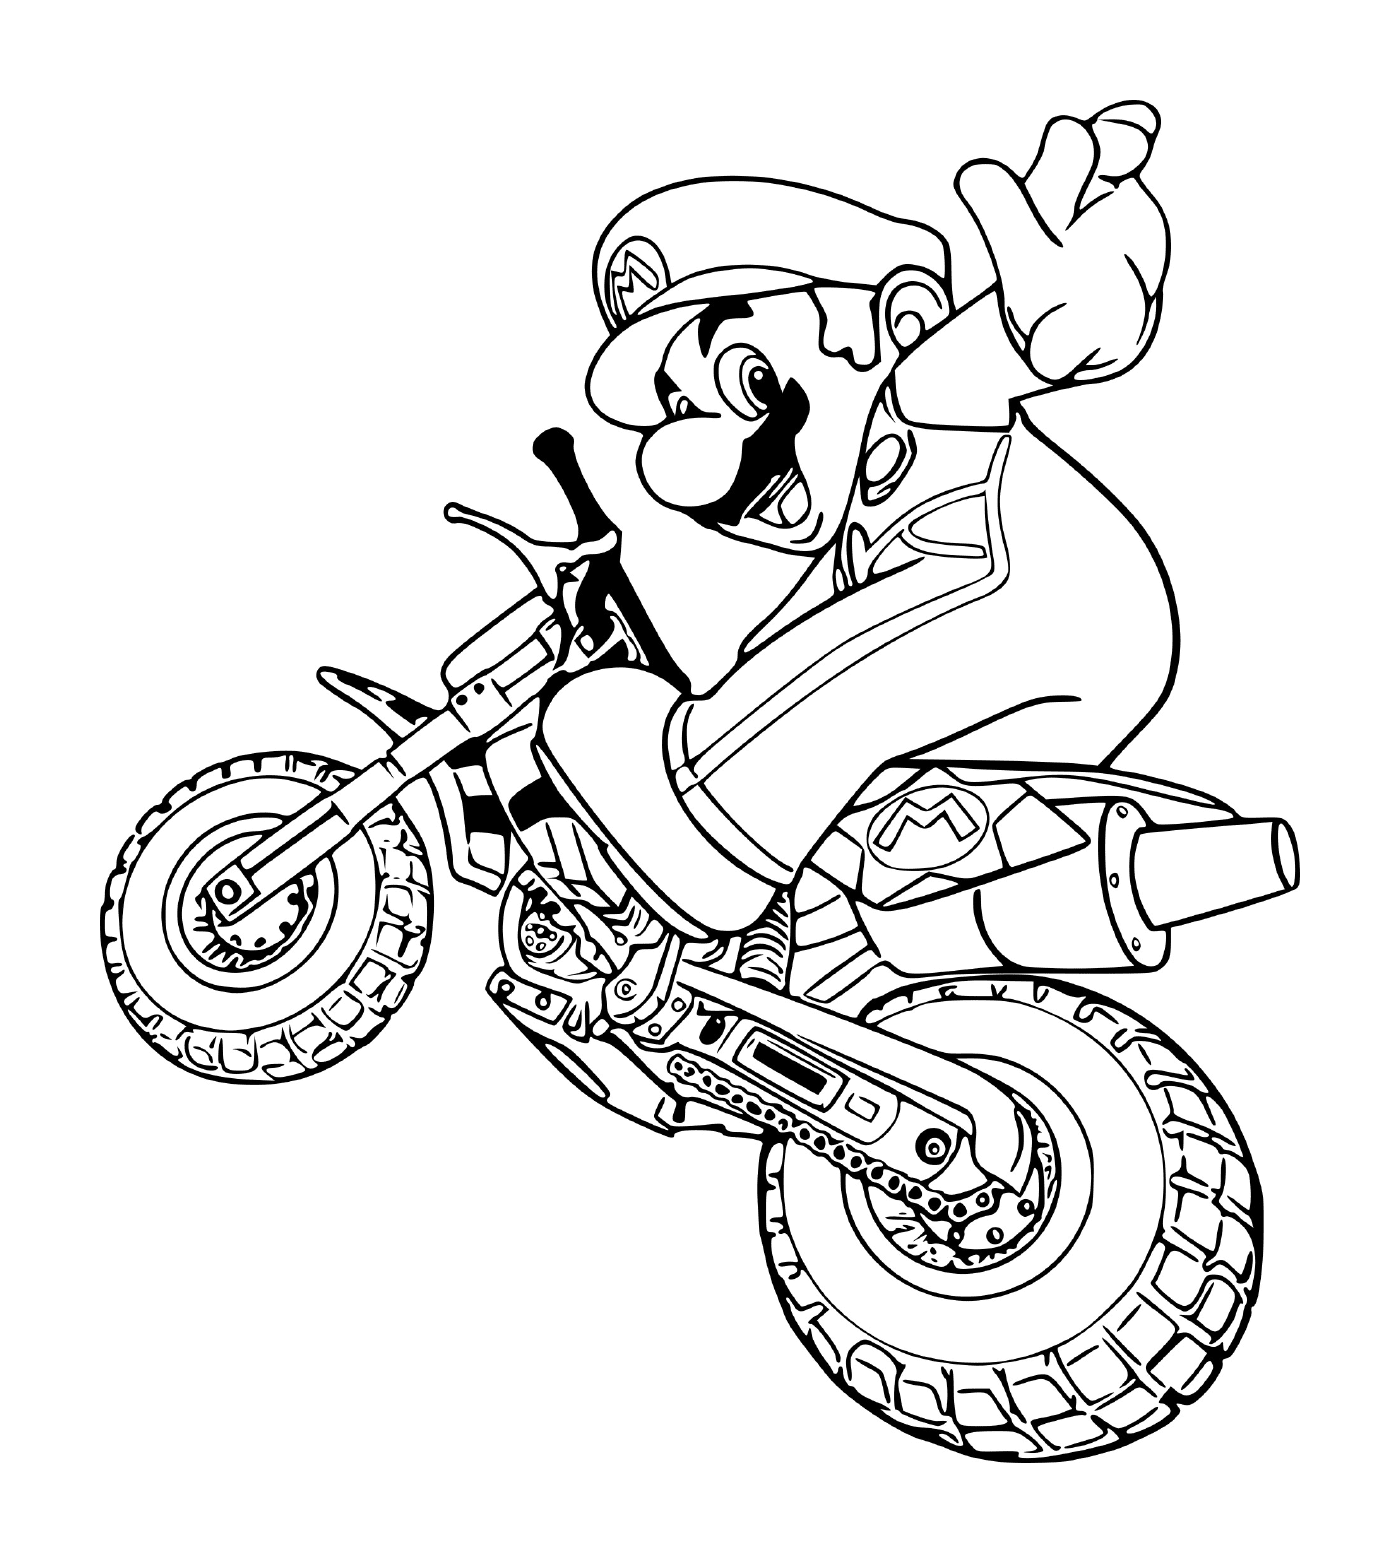   Mario sur une moto 